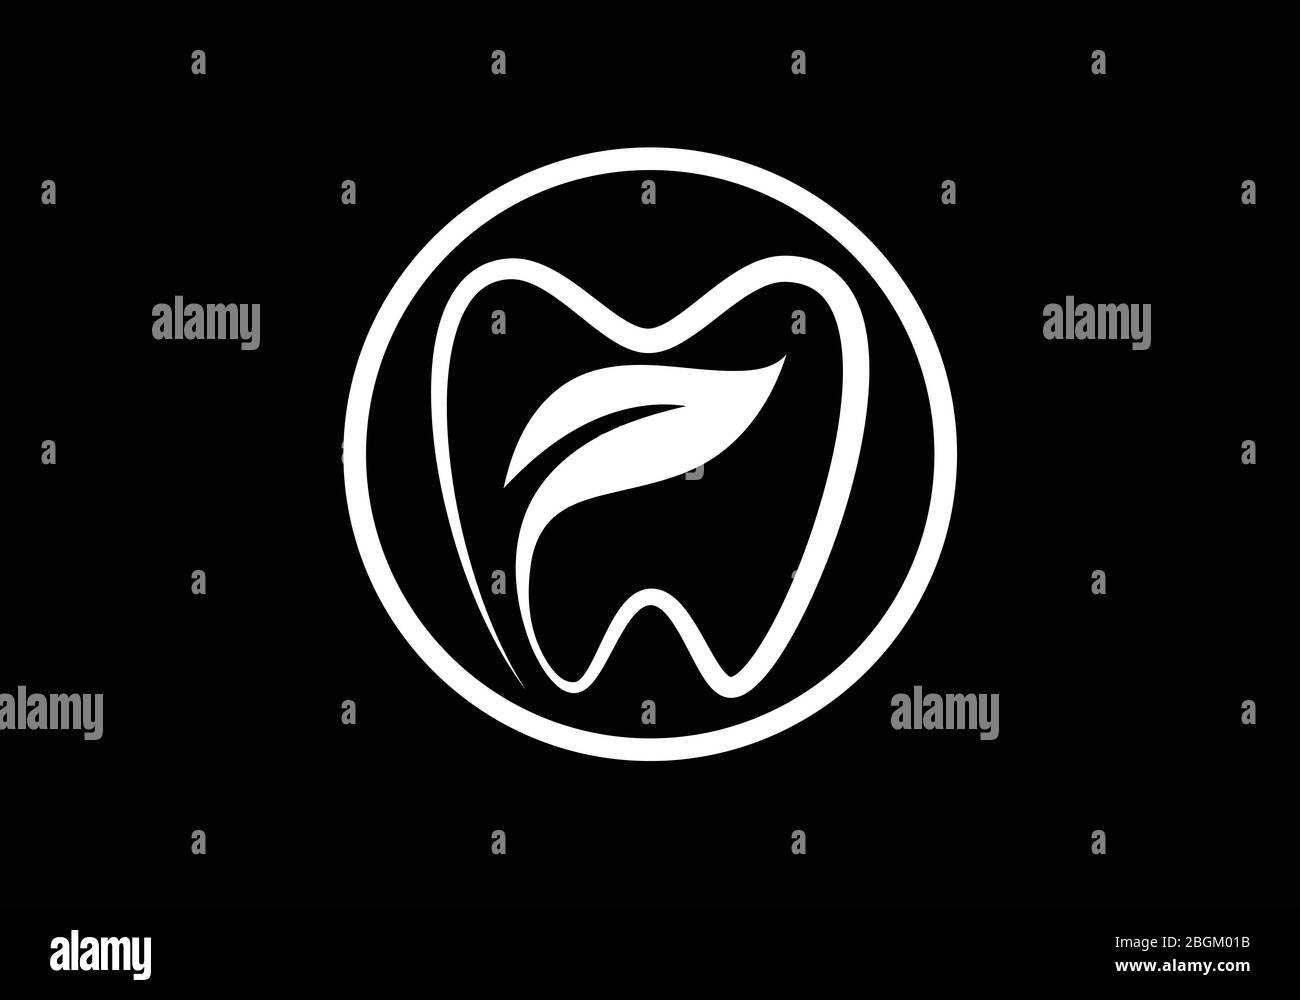 Dentist logo Stock Vector Images - Alamy